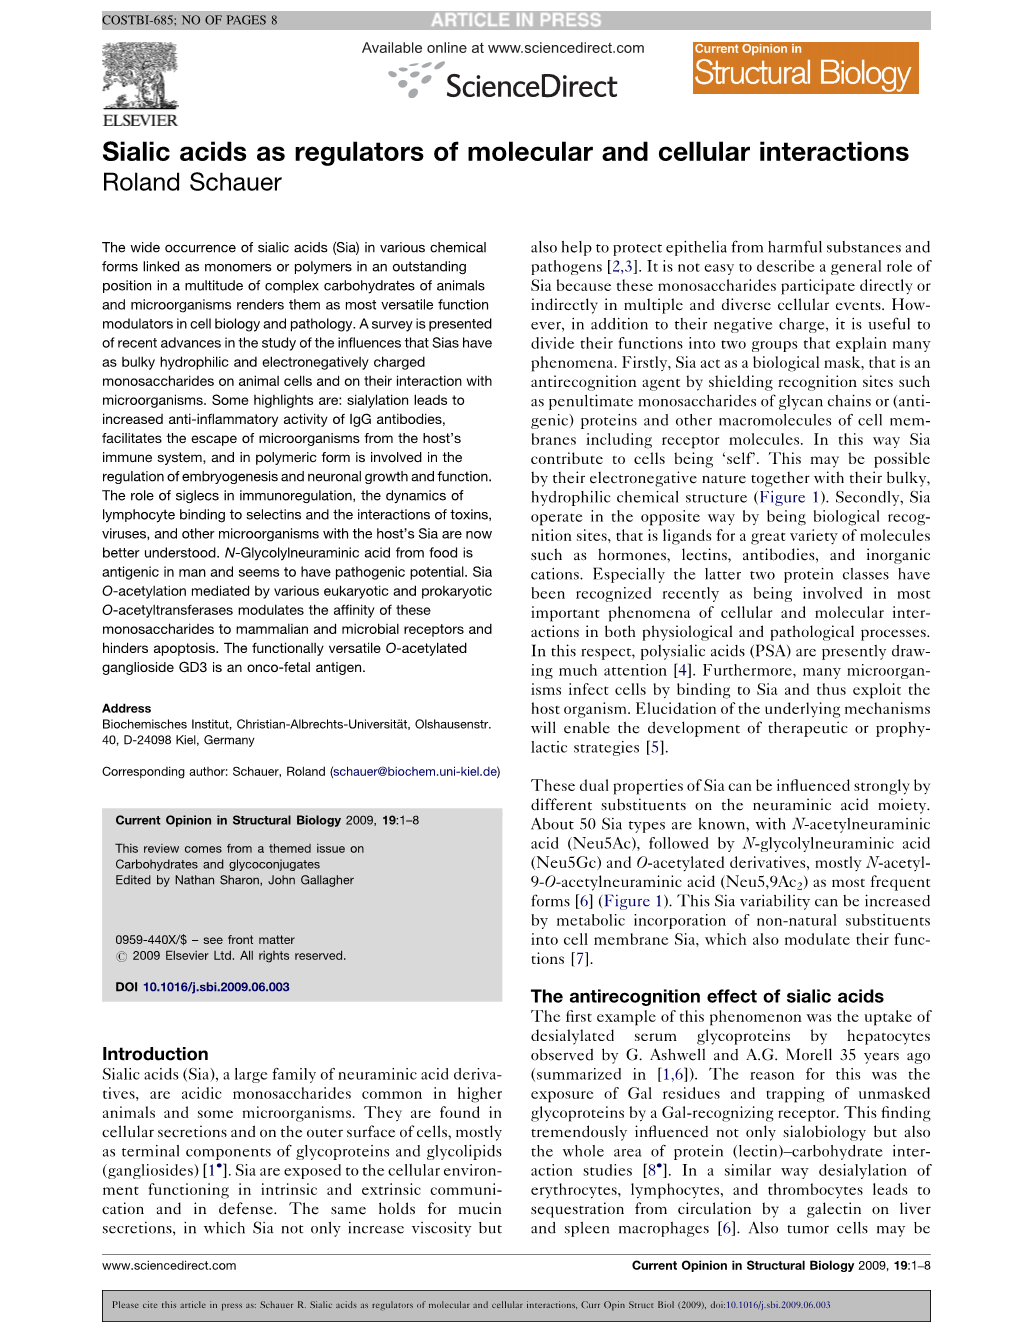 Sialic Acids As Regulators of Molecular and Cellular Interactions Roland Schauer